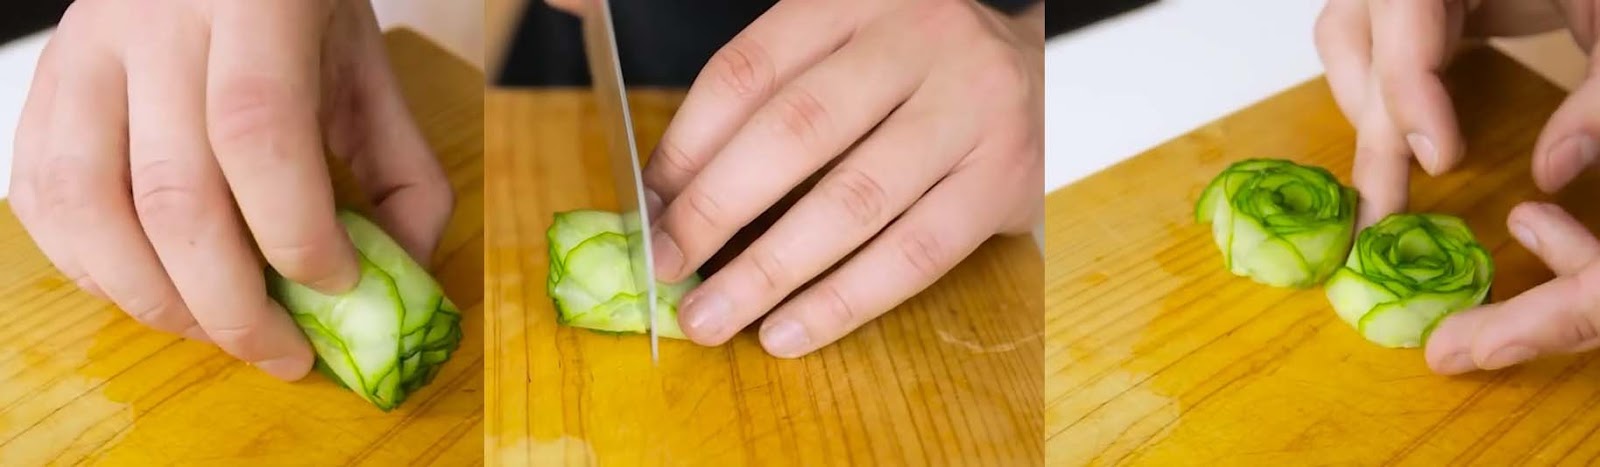 Gini 3 cara memotong sayuran agar terlihat cantik